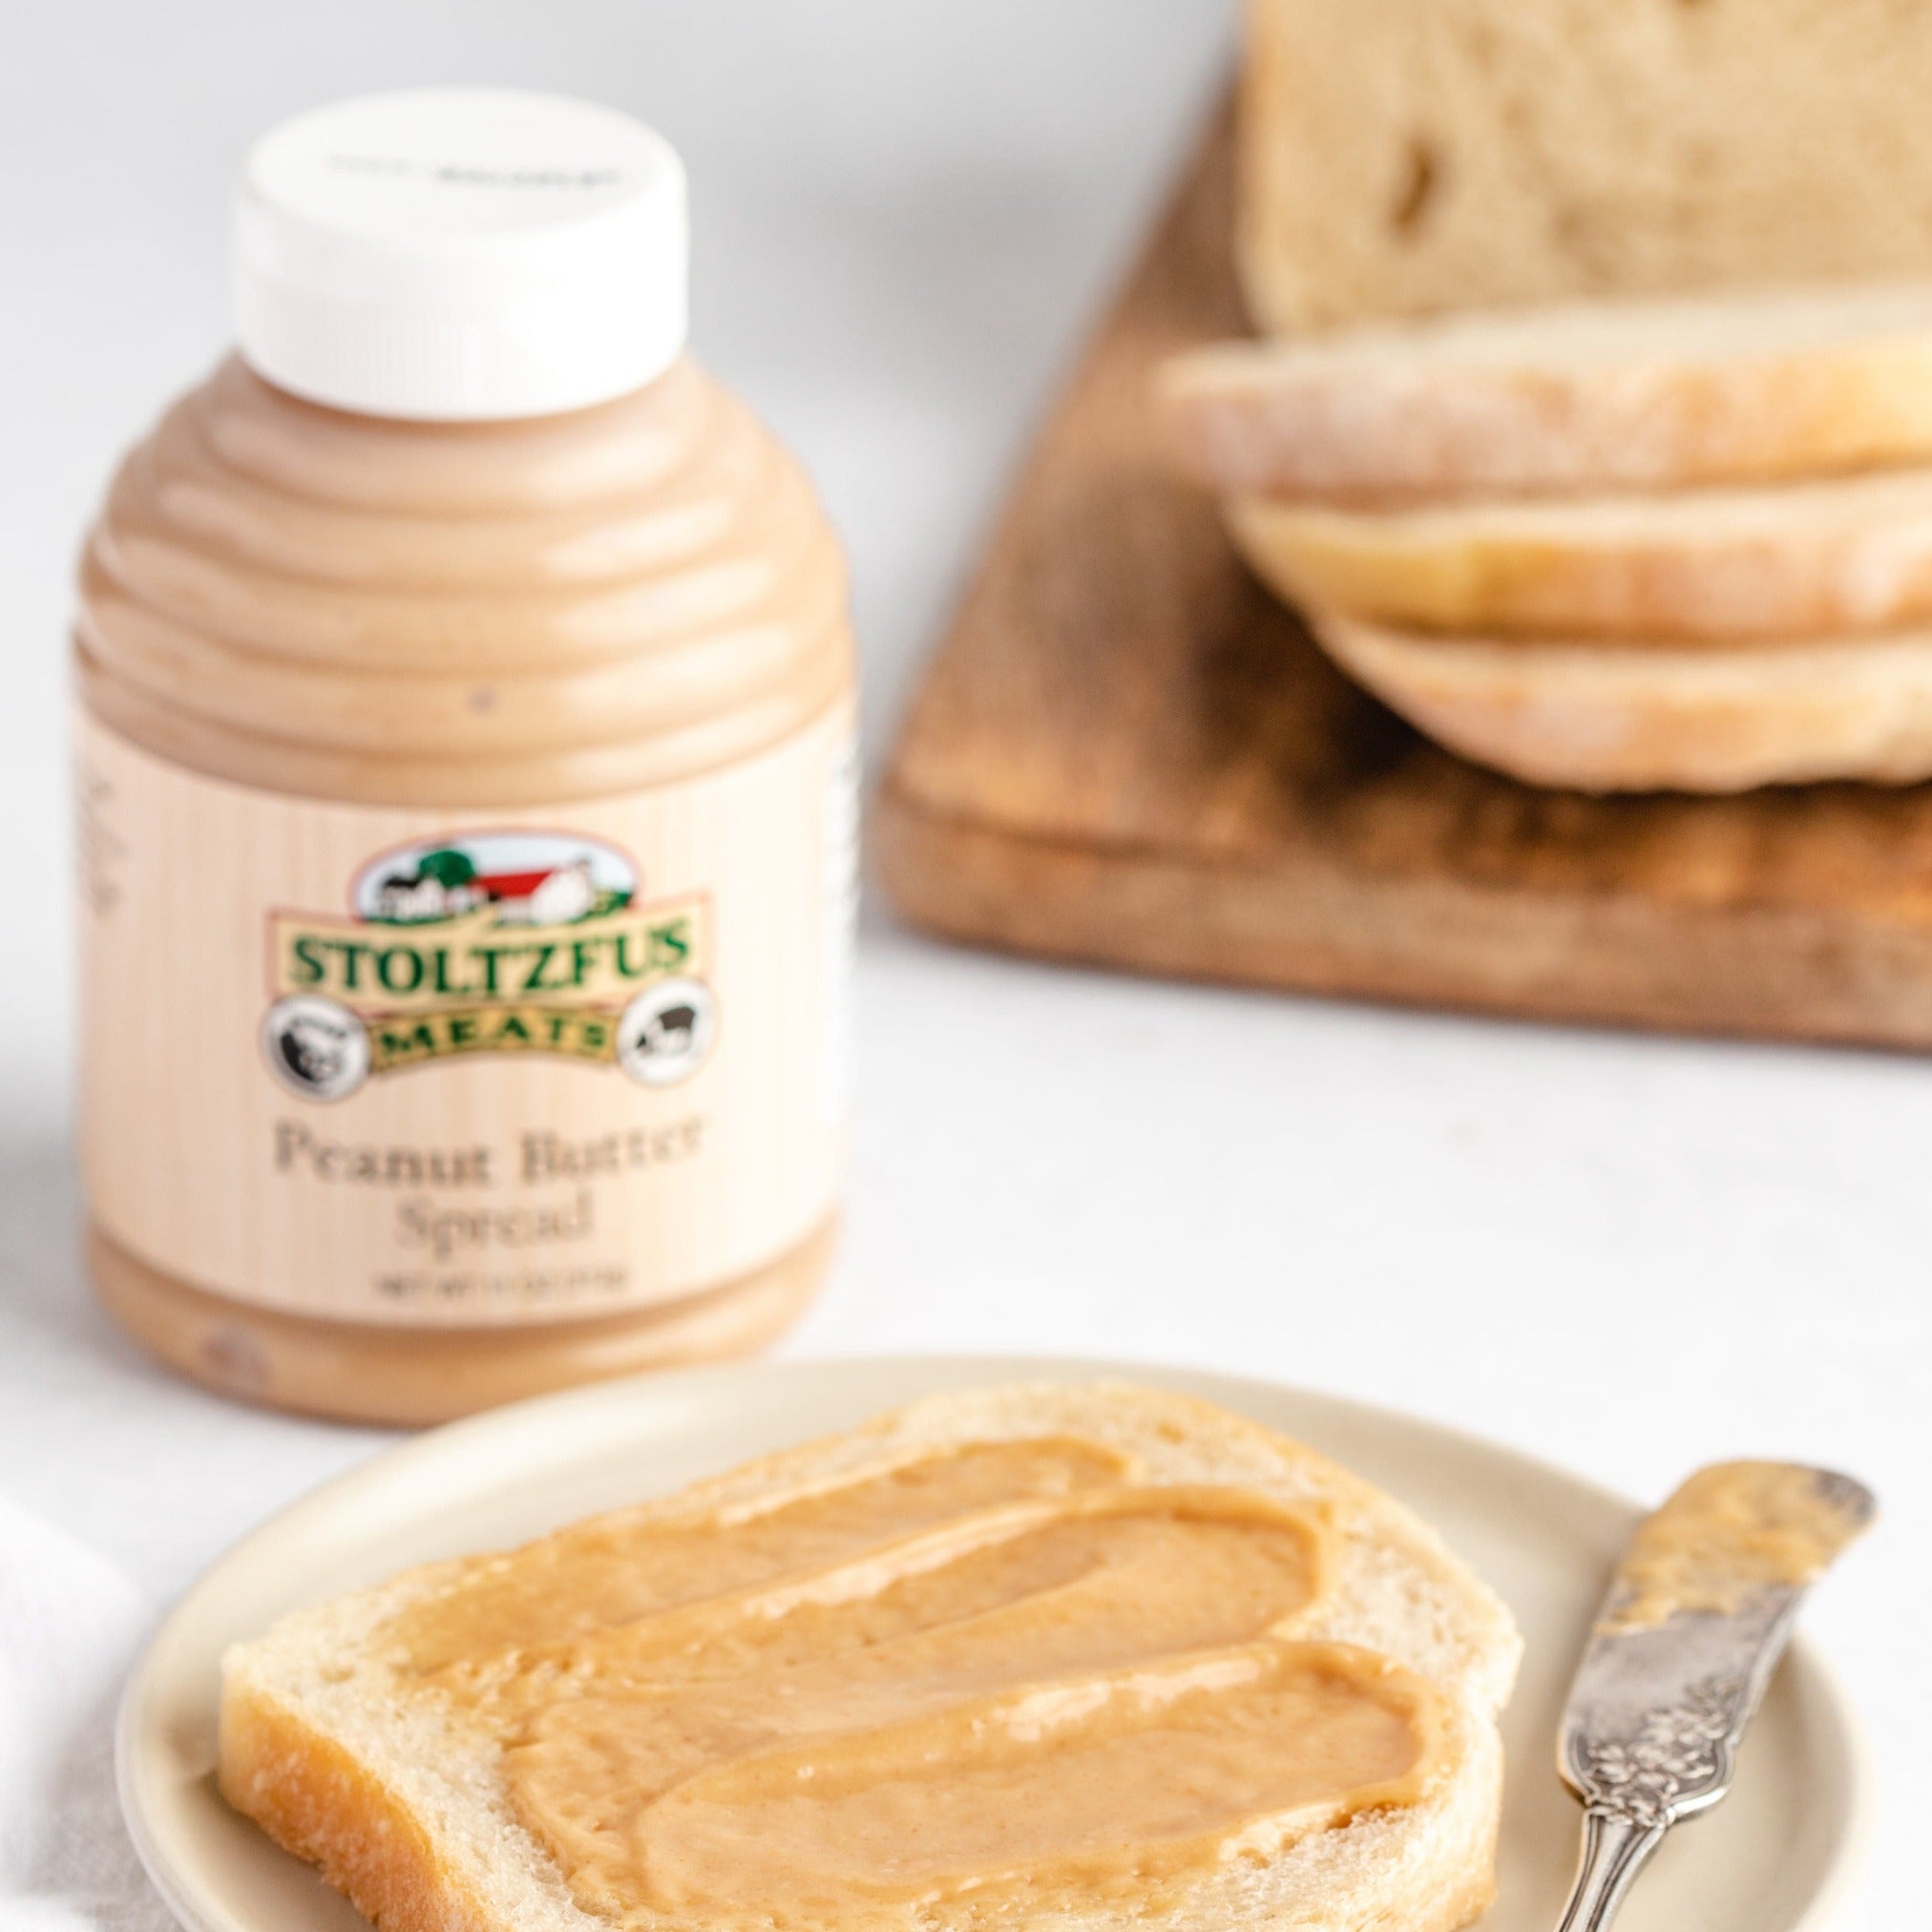 amish peanut butter spread on bread